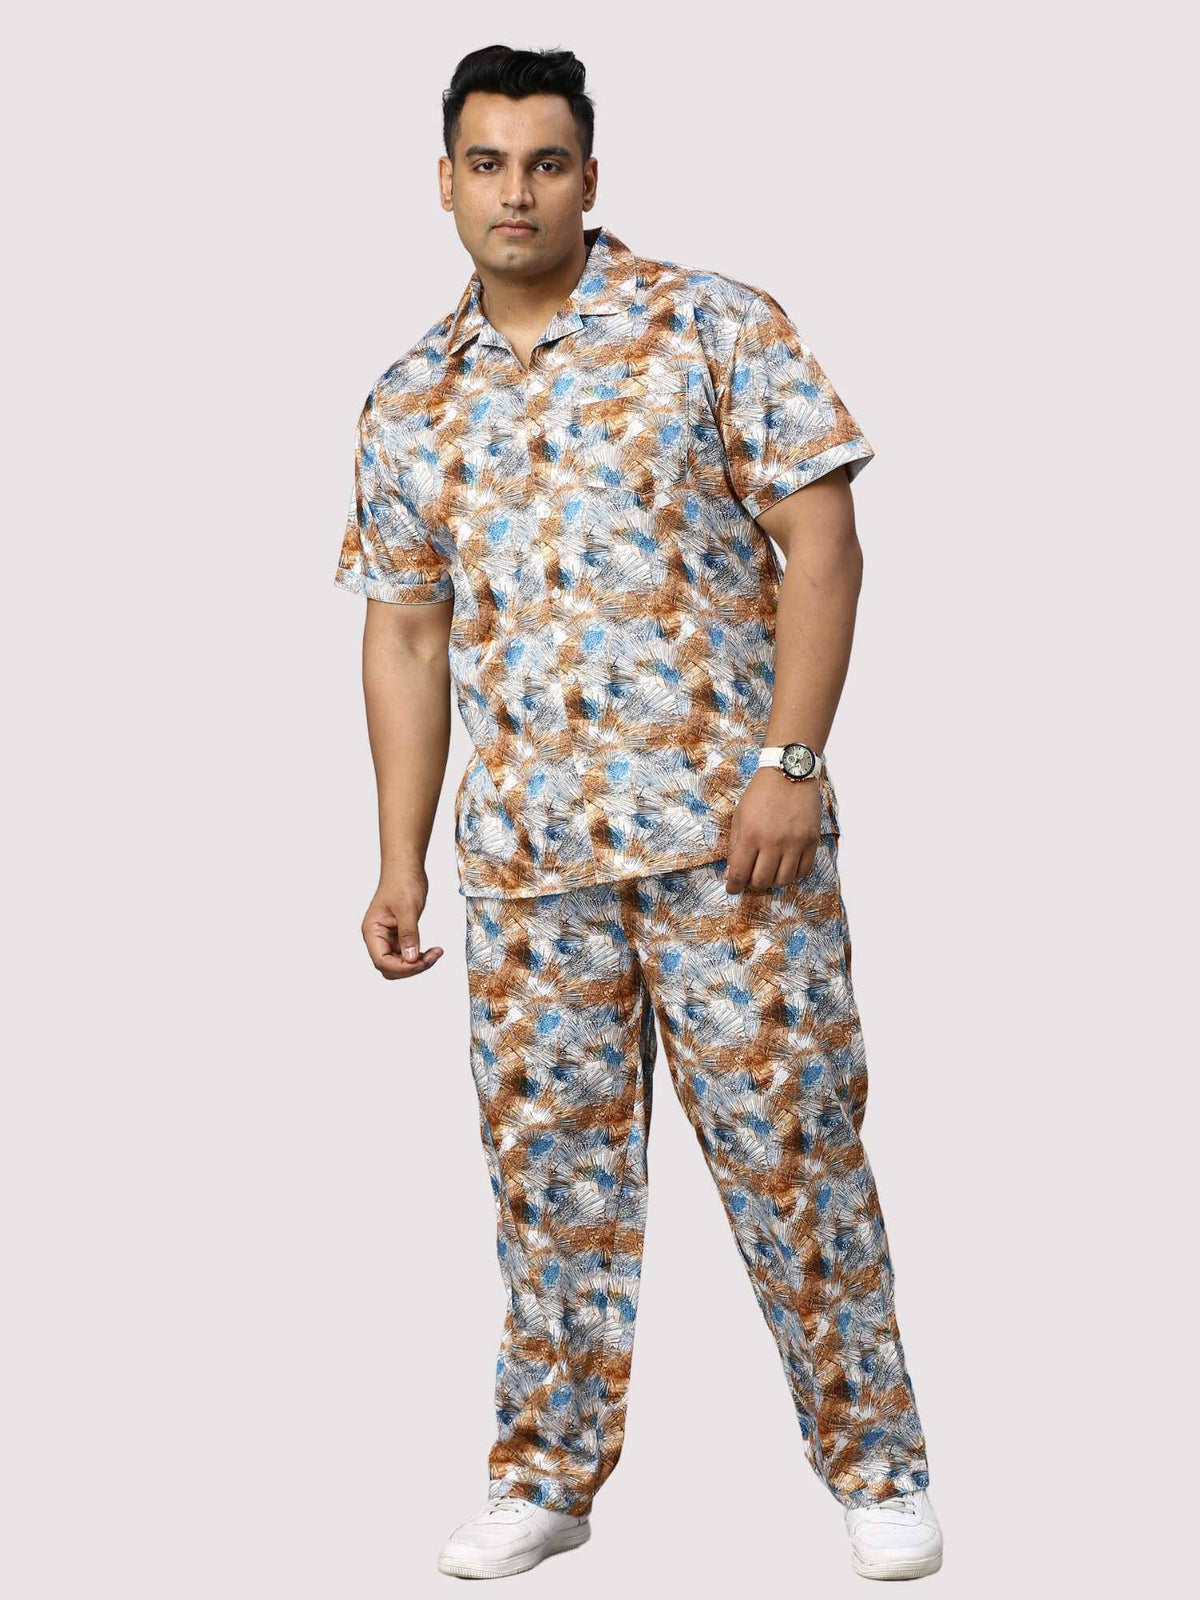 Star Dust Digital Printed Full Co-Ords Men's Plus Size - Guniaa Fashions